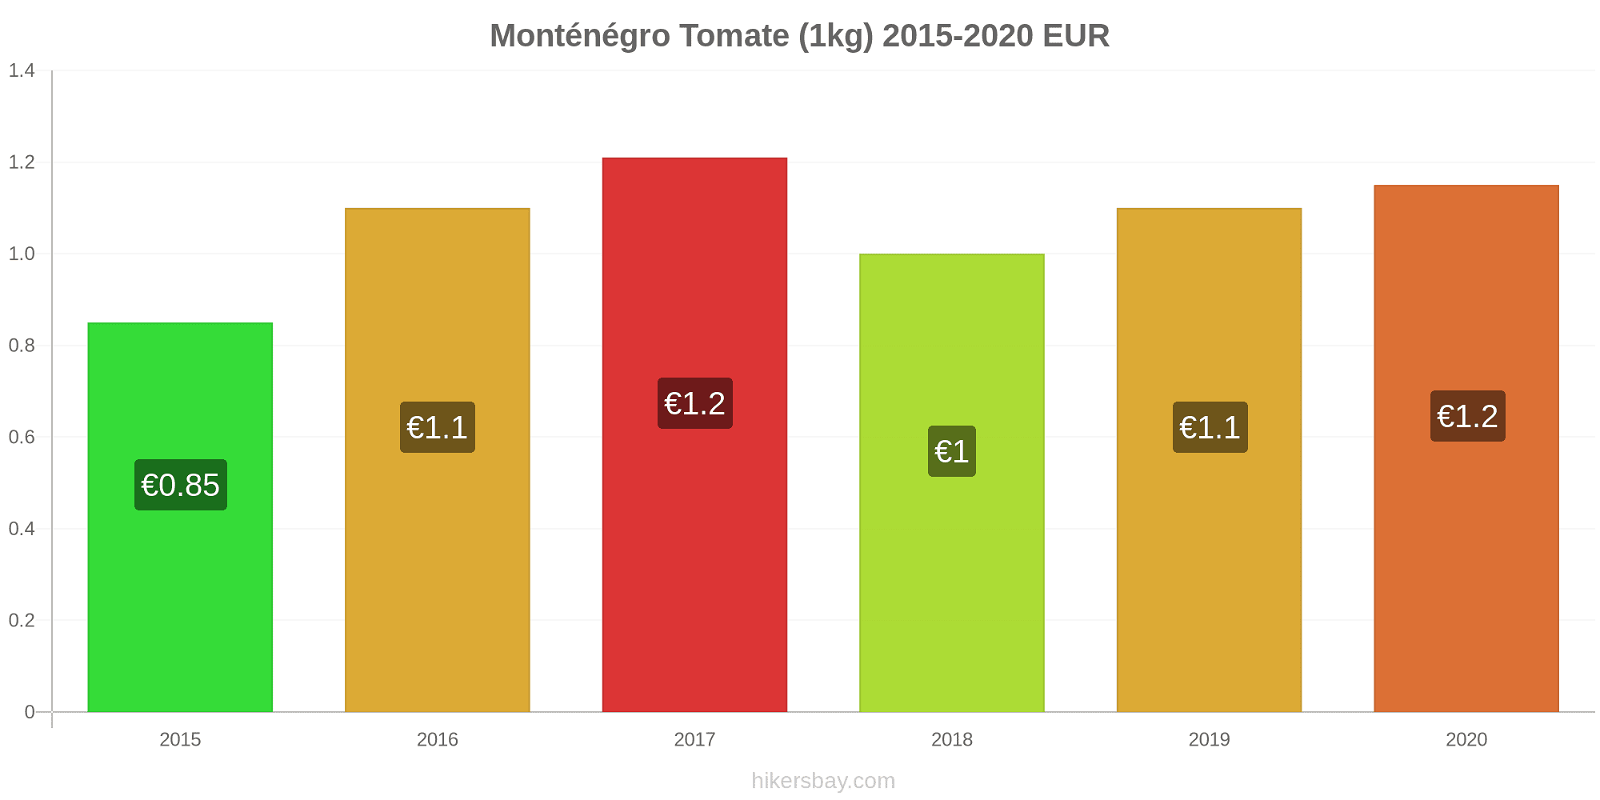 Monténégro changements de prix Tomate (1kg) hikersbay.com